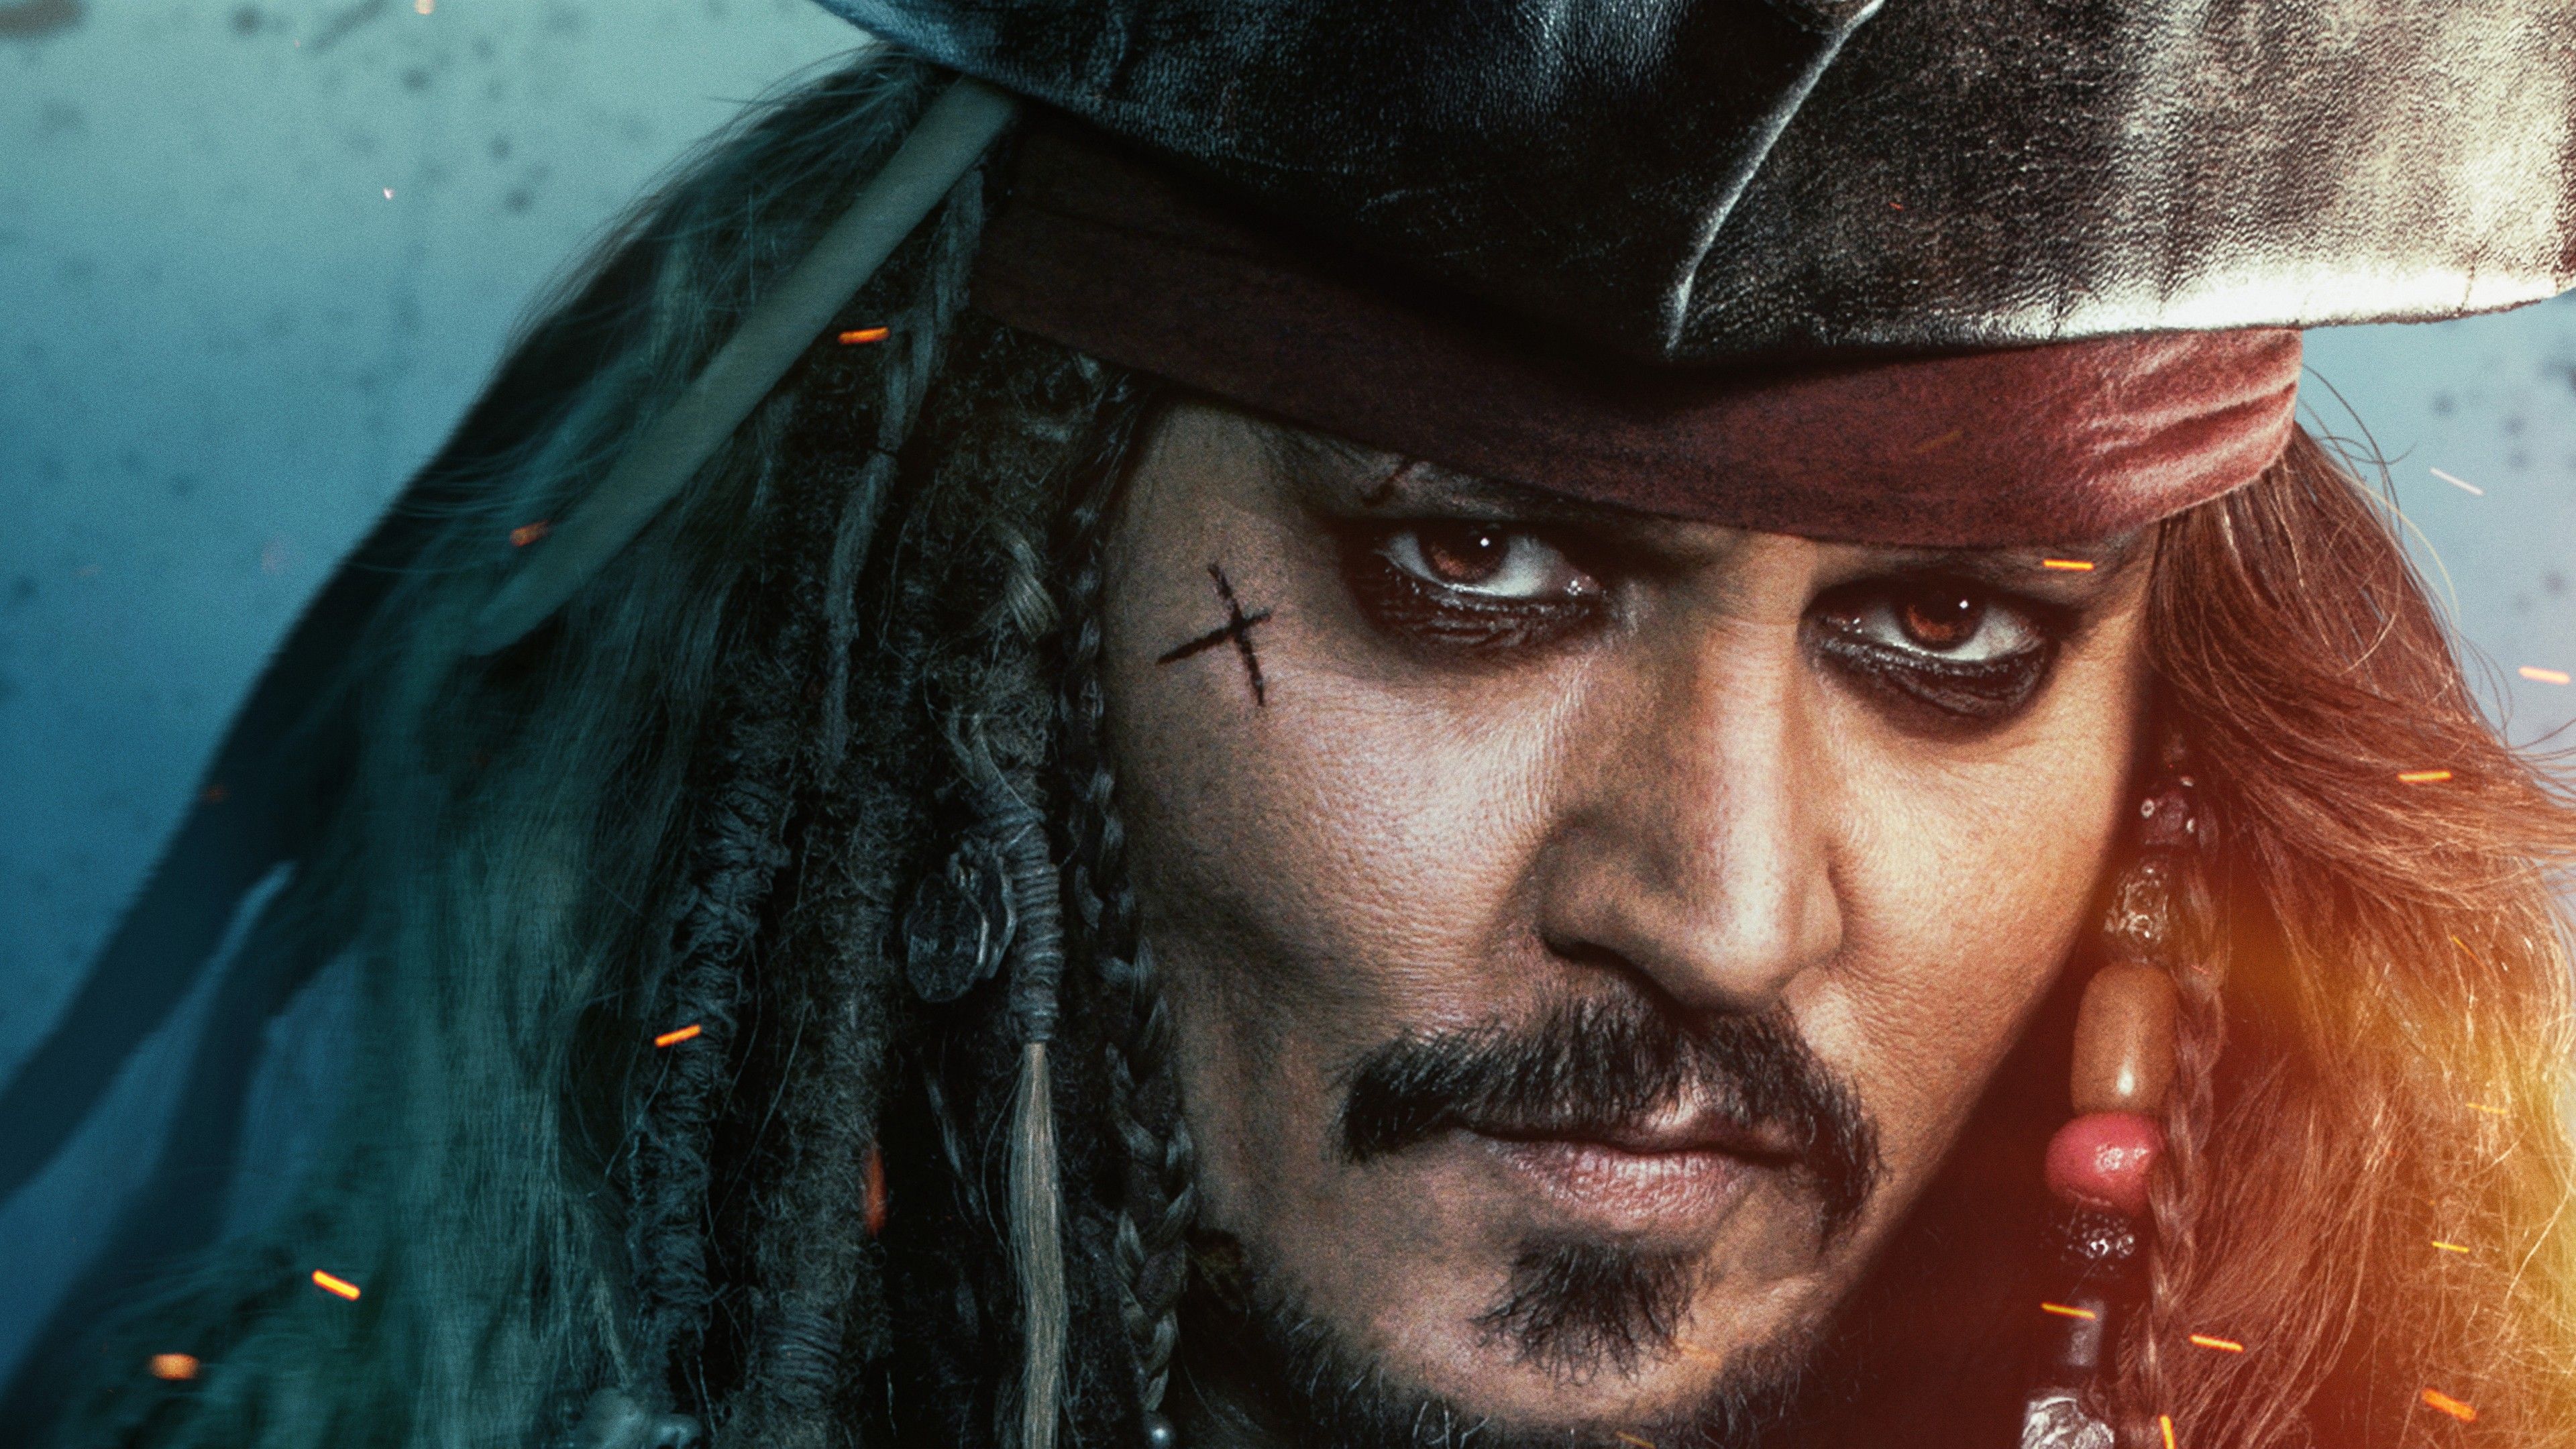 Wallpaper Pirates of the Caribbean: Dead Men Tell No Tales, 4k, 8k, Johnny Depp, Movies